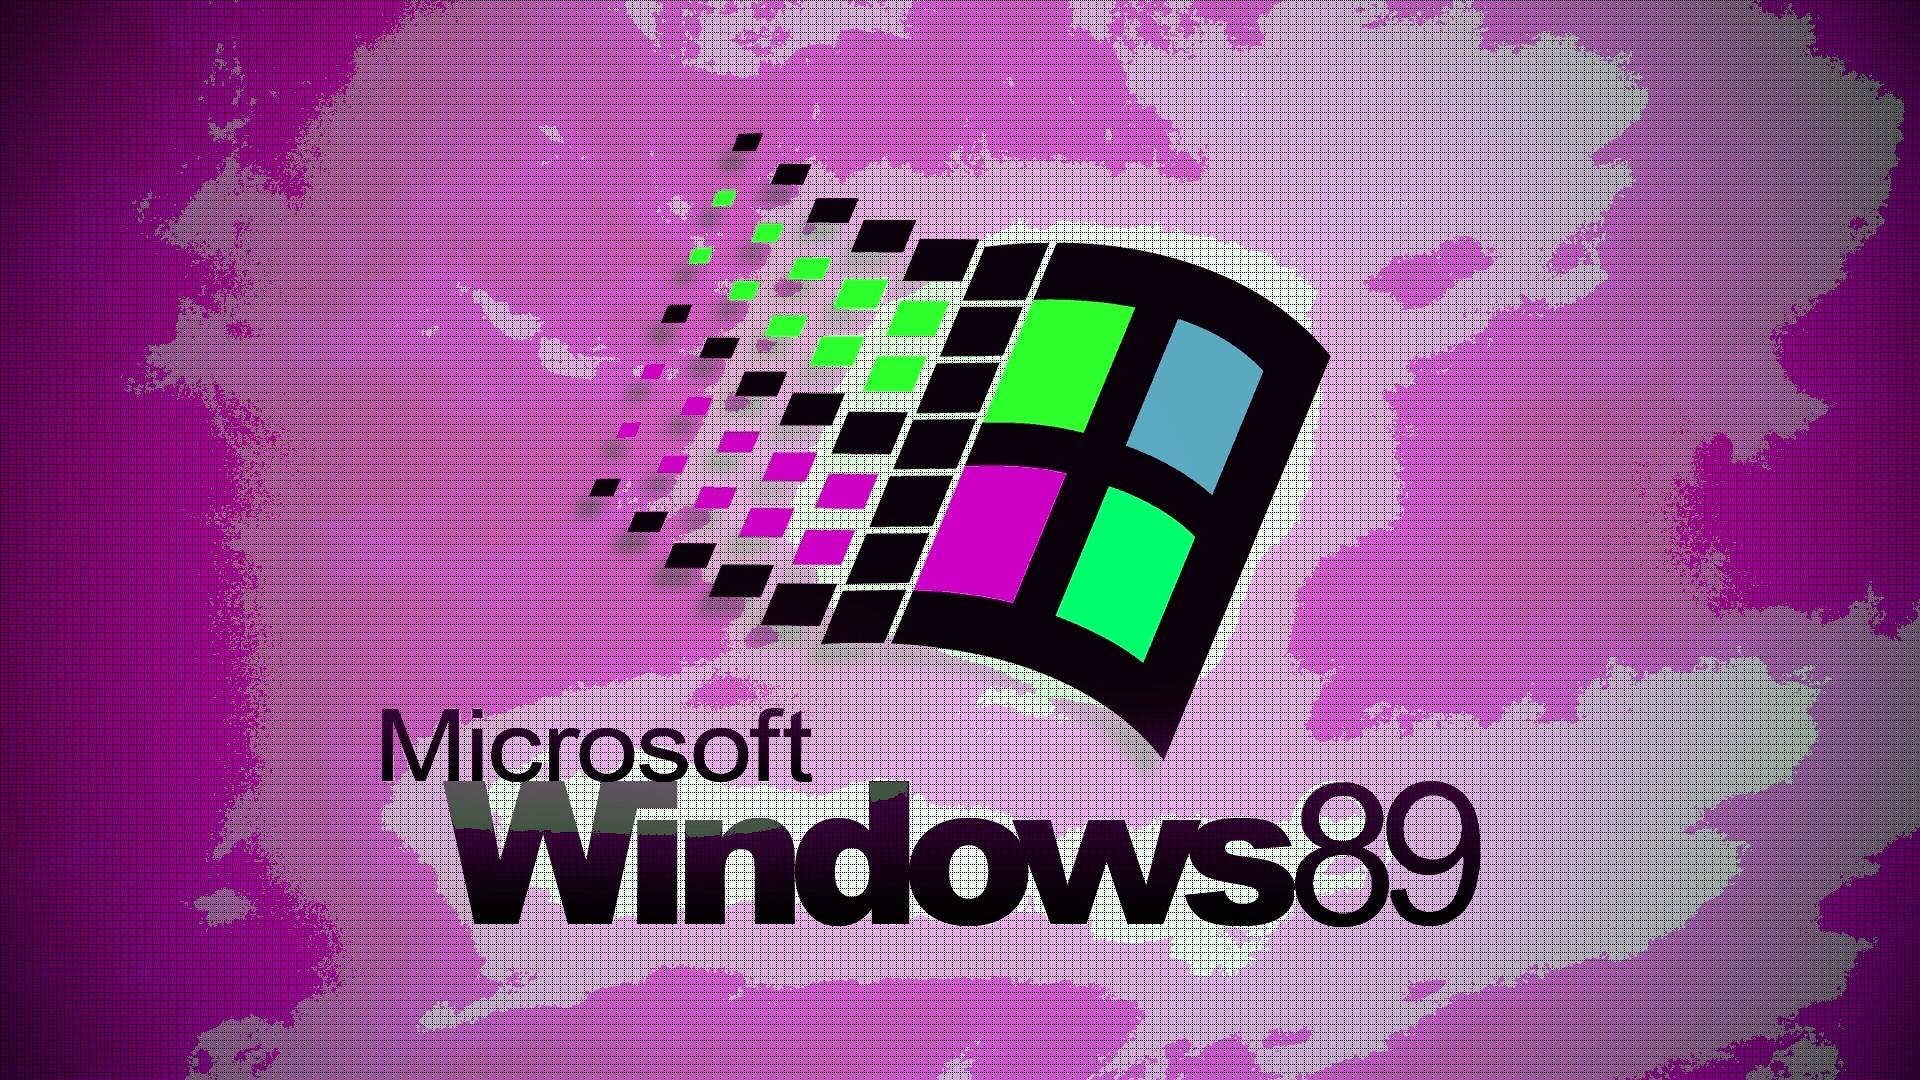 Aesthetic Windows 98 Wallpaper